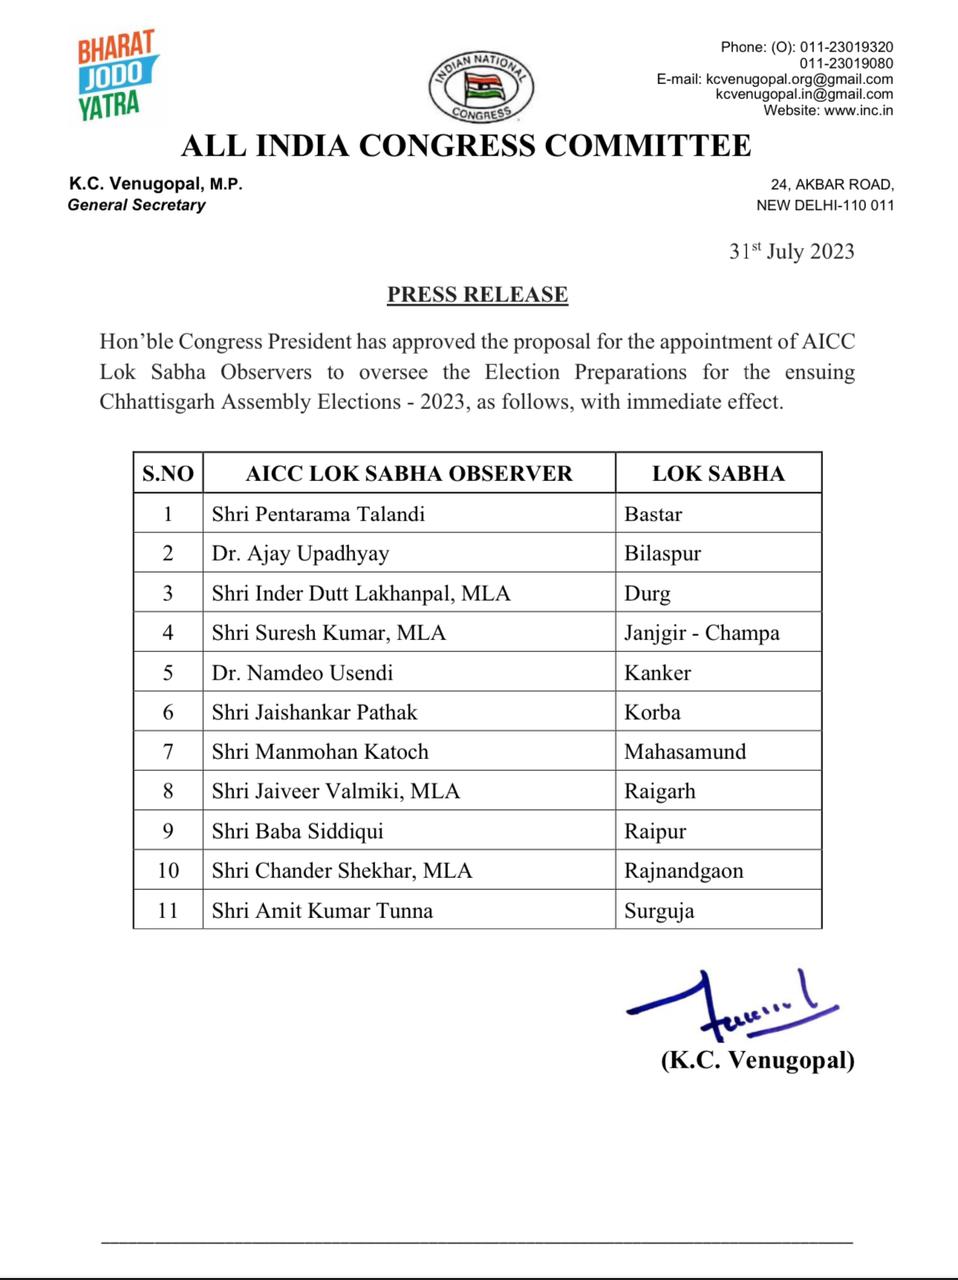 Lok Sabha wise Congress Observer appointed in Chhattisgarh